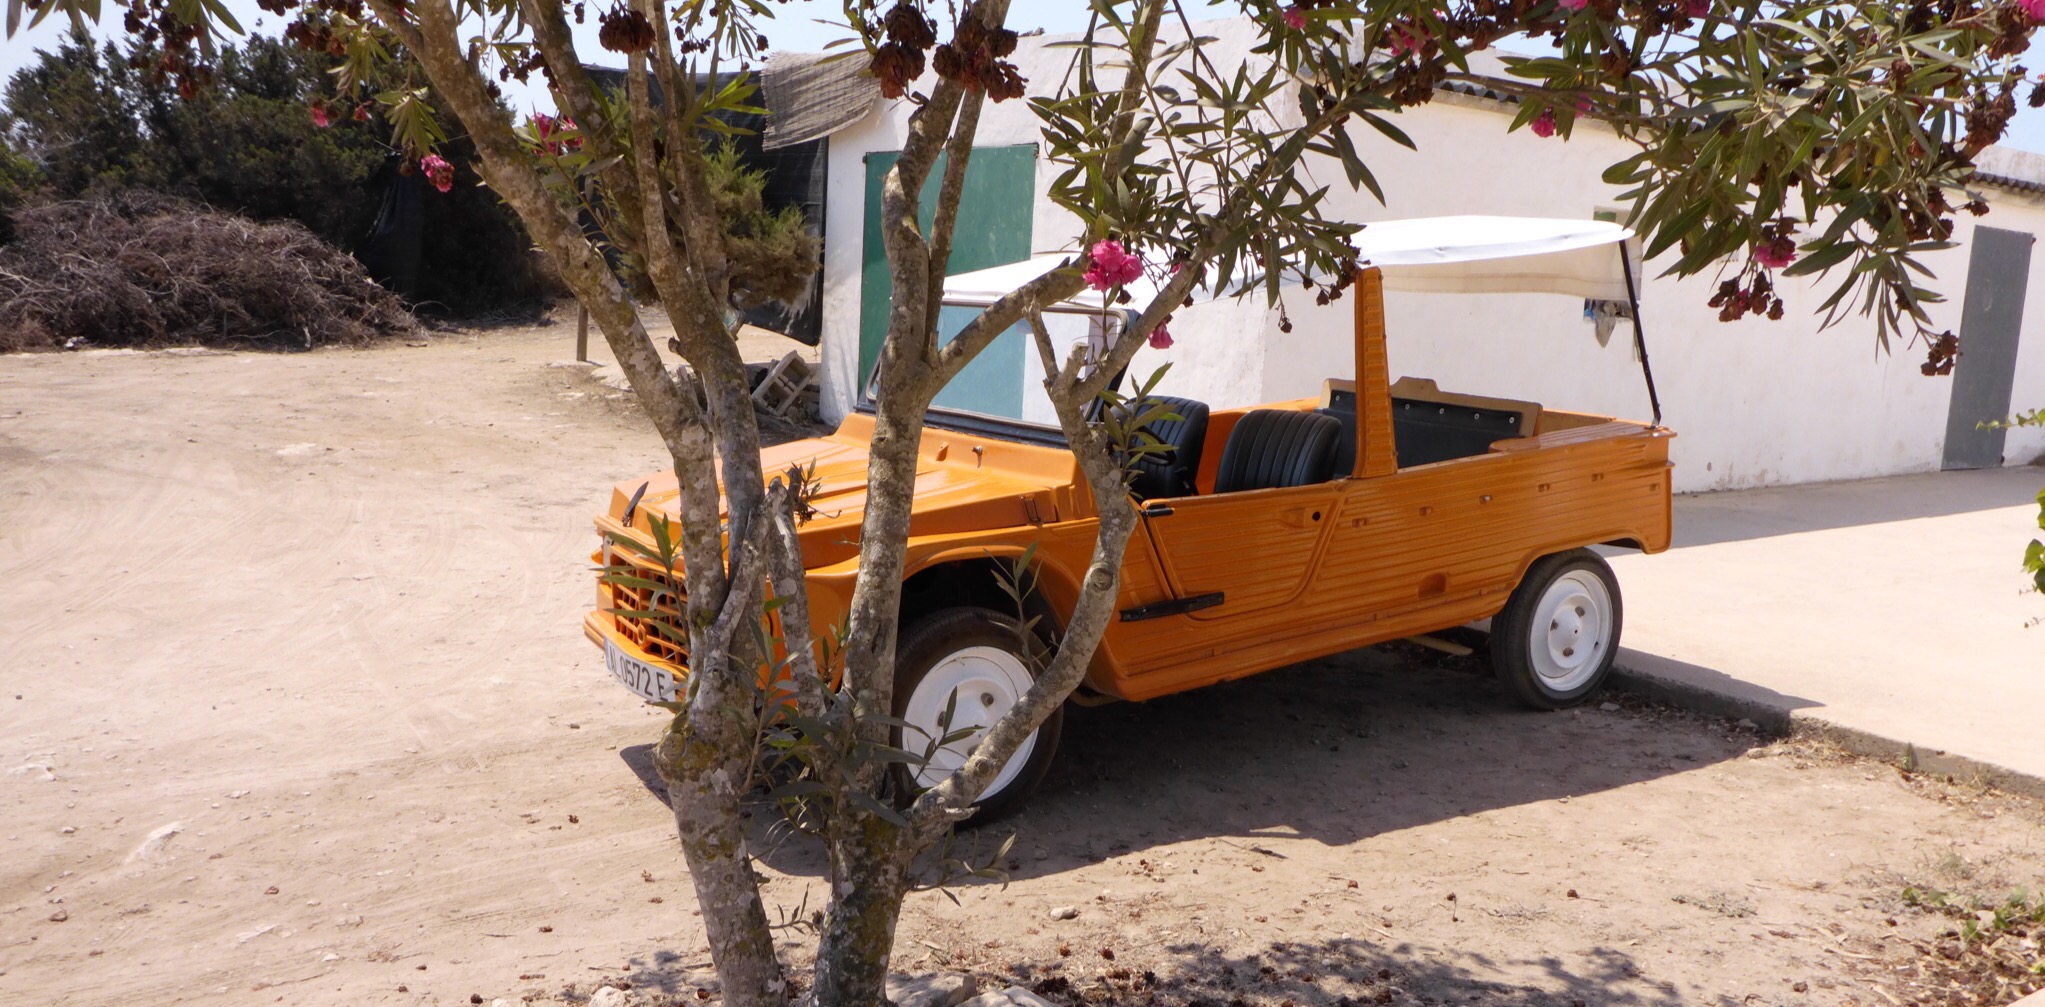 Take a ride in the Mehari over Formentera